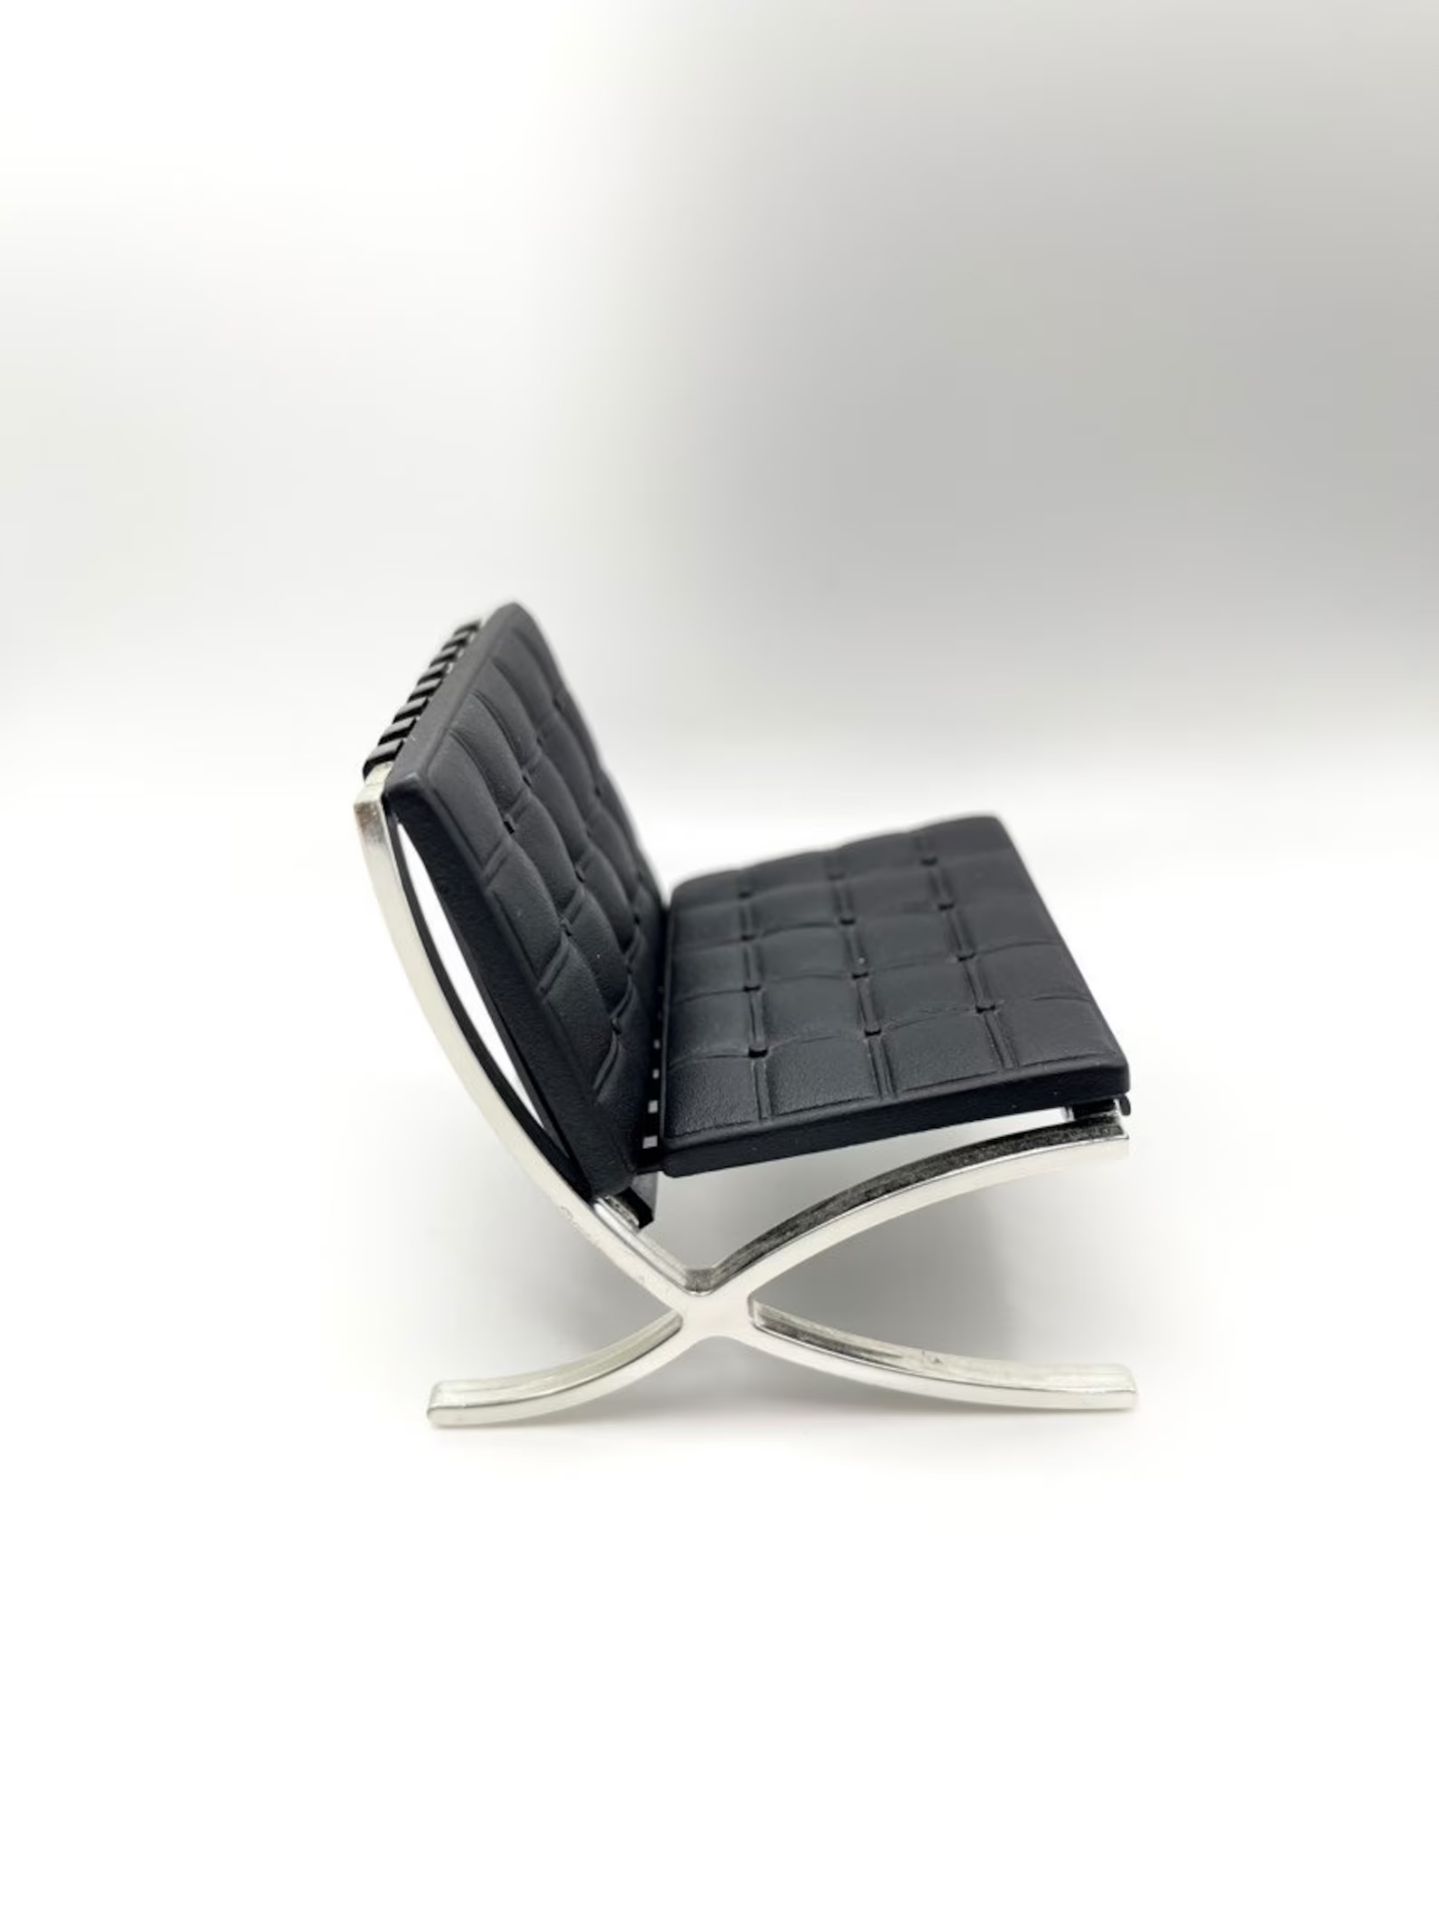 Barcelona Chair Desk Display Model - Bild 2 aus 5